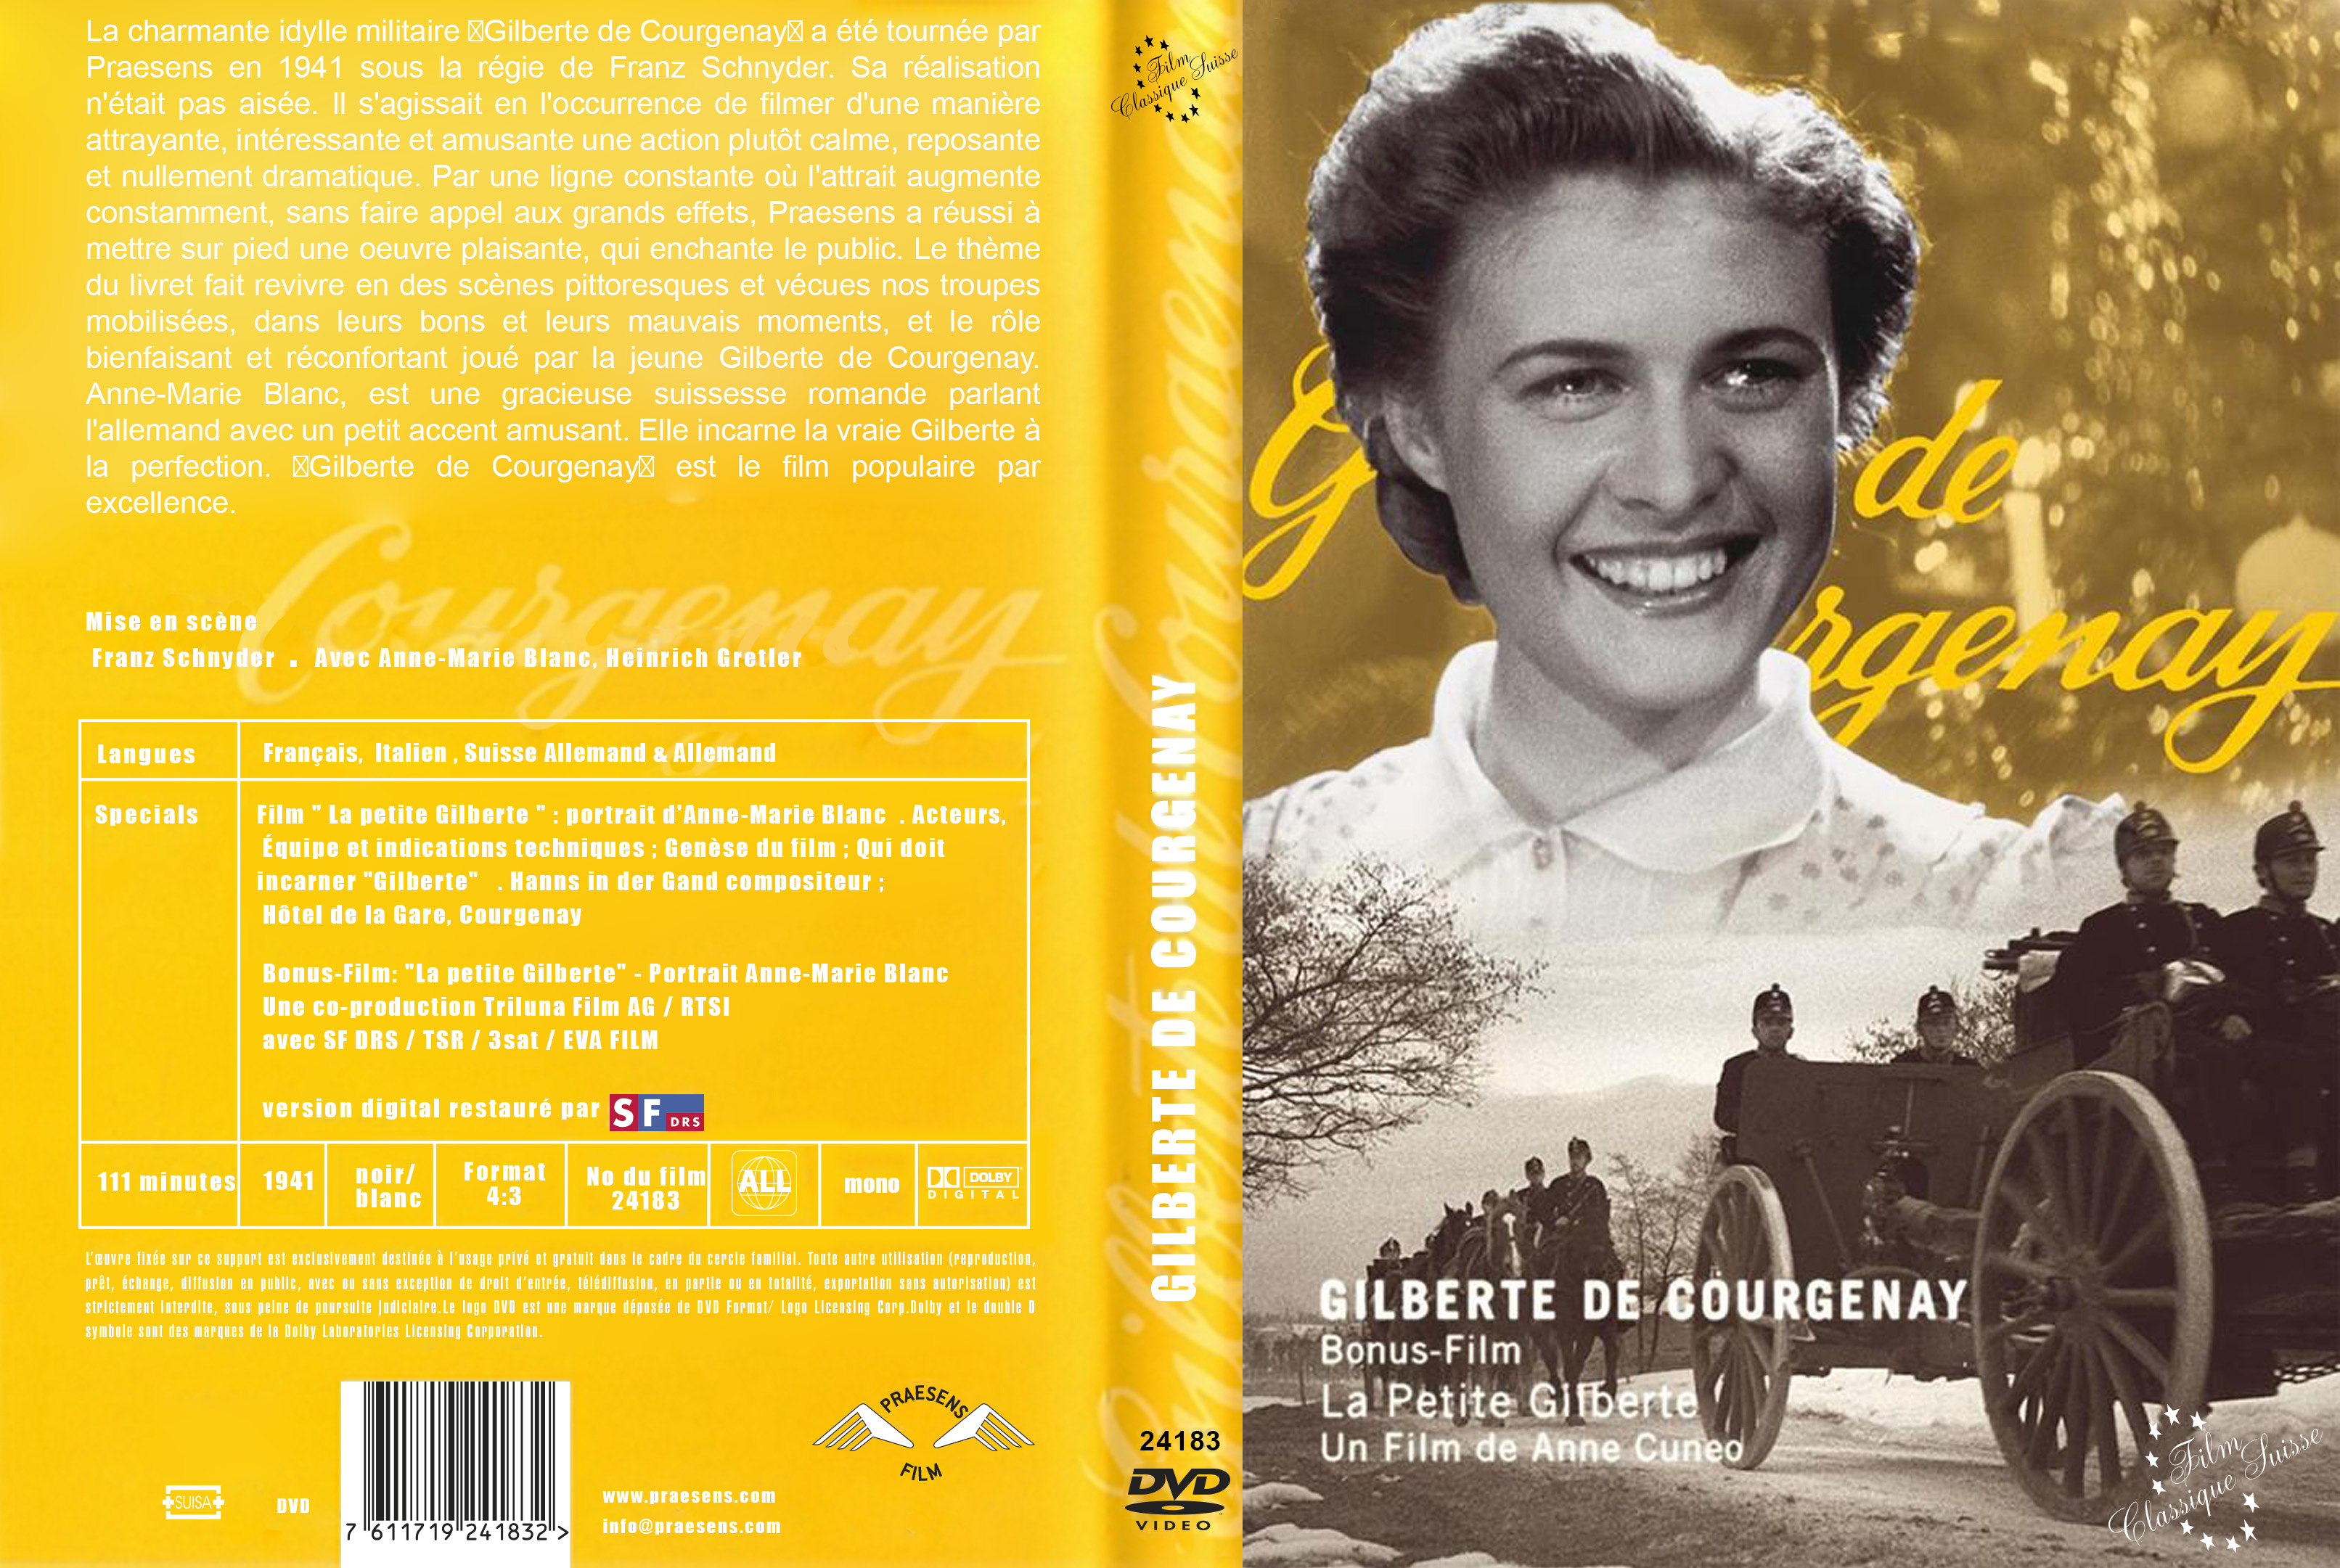 Jaquette DVD Gilberte de Courgenay custom